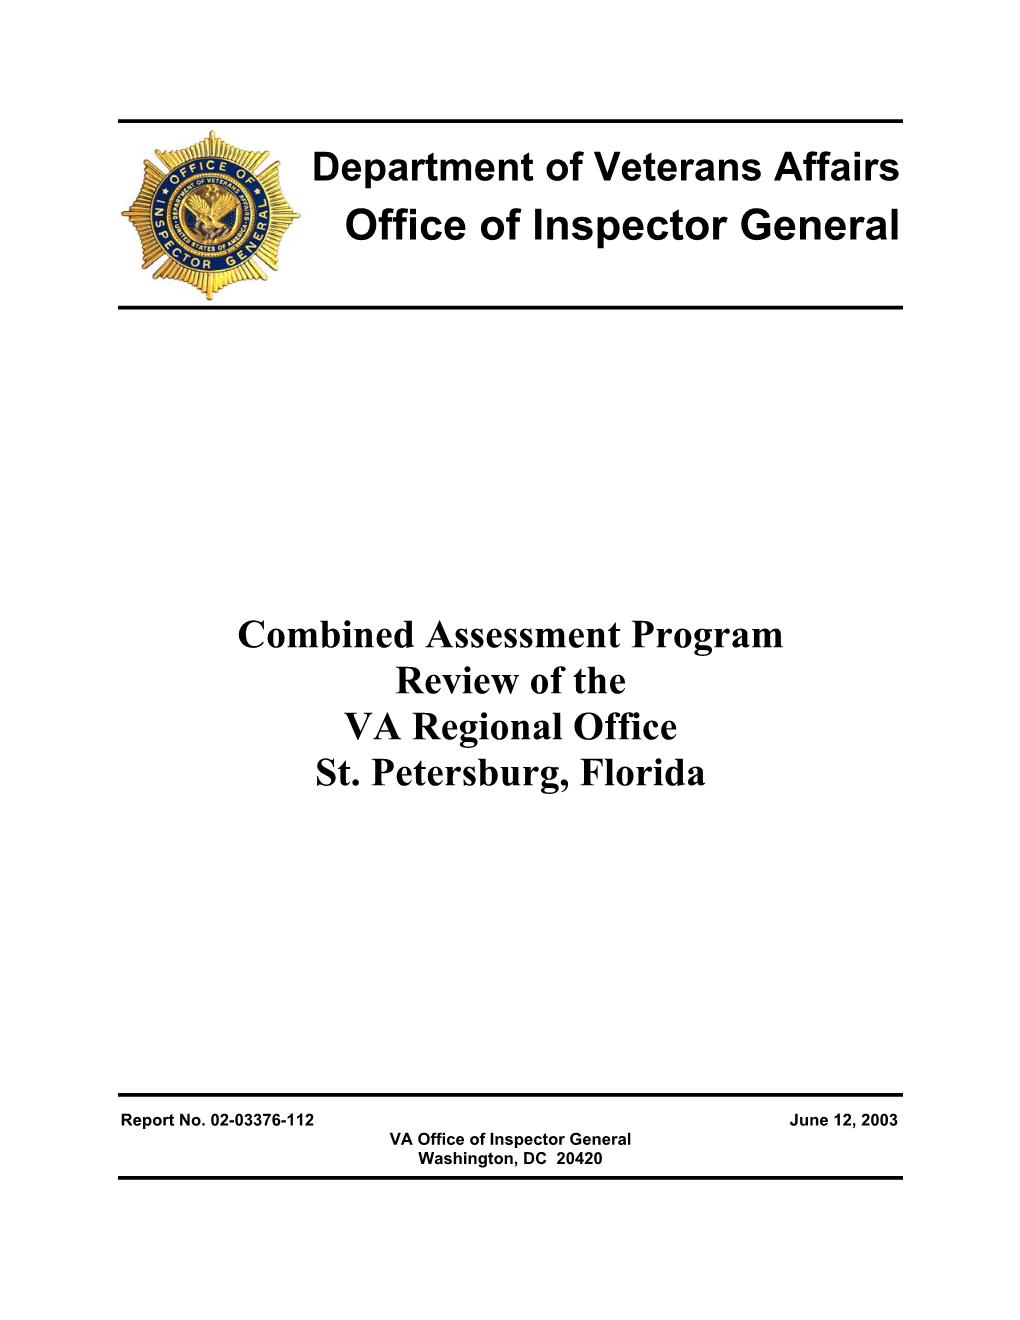 Combined Assessment Program Review of the VA Regional Office St. Petersburg, Florida; Rpt #02-03376-112